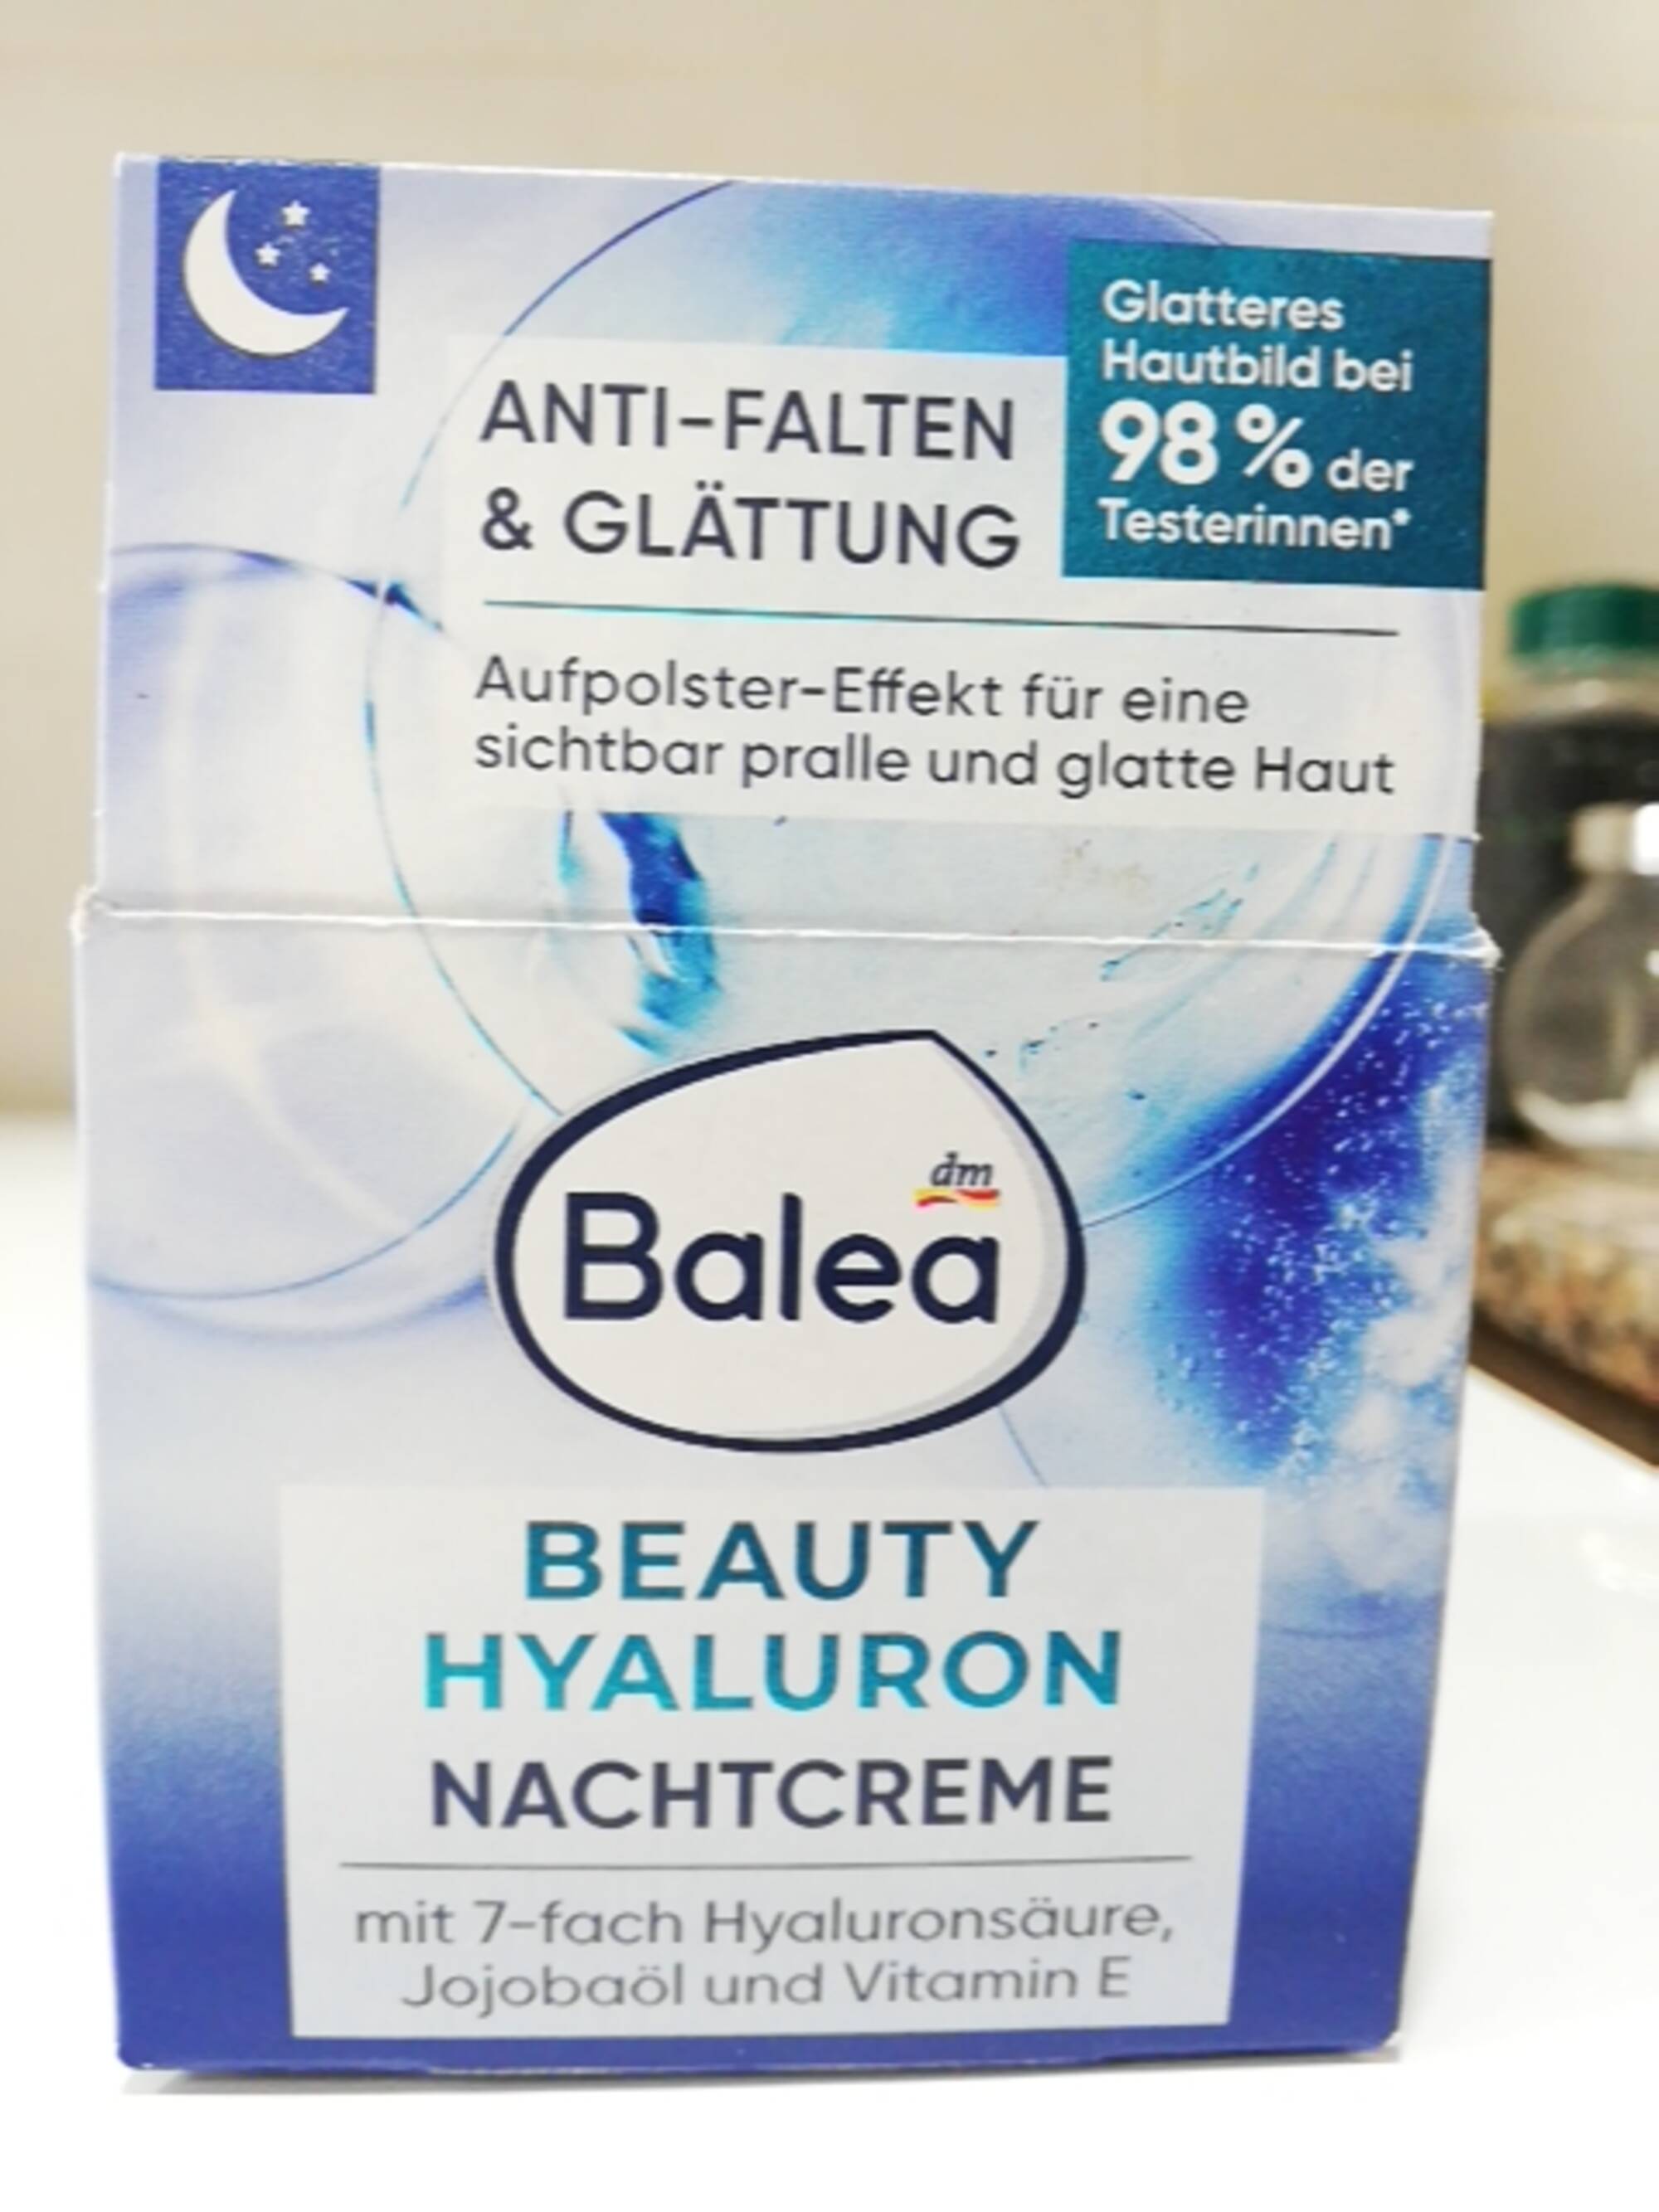 BALEA - Beauty hyaluron nachtcreme - Anti-falten & Glättung